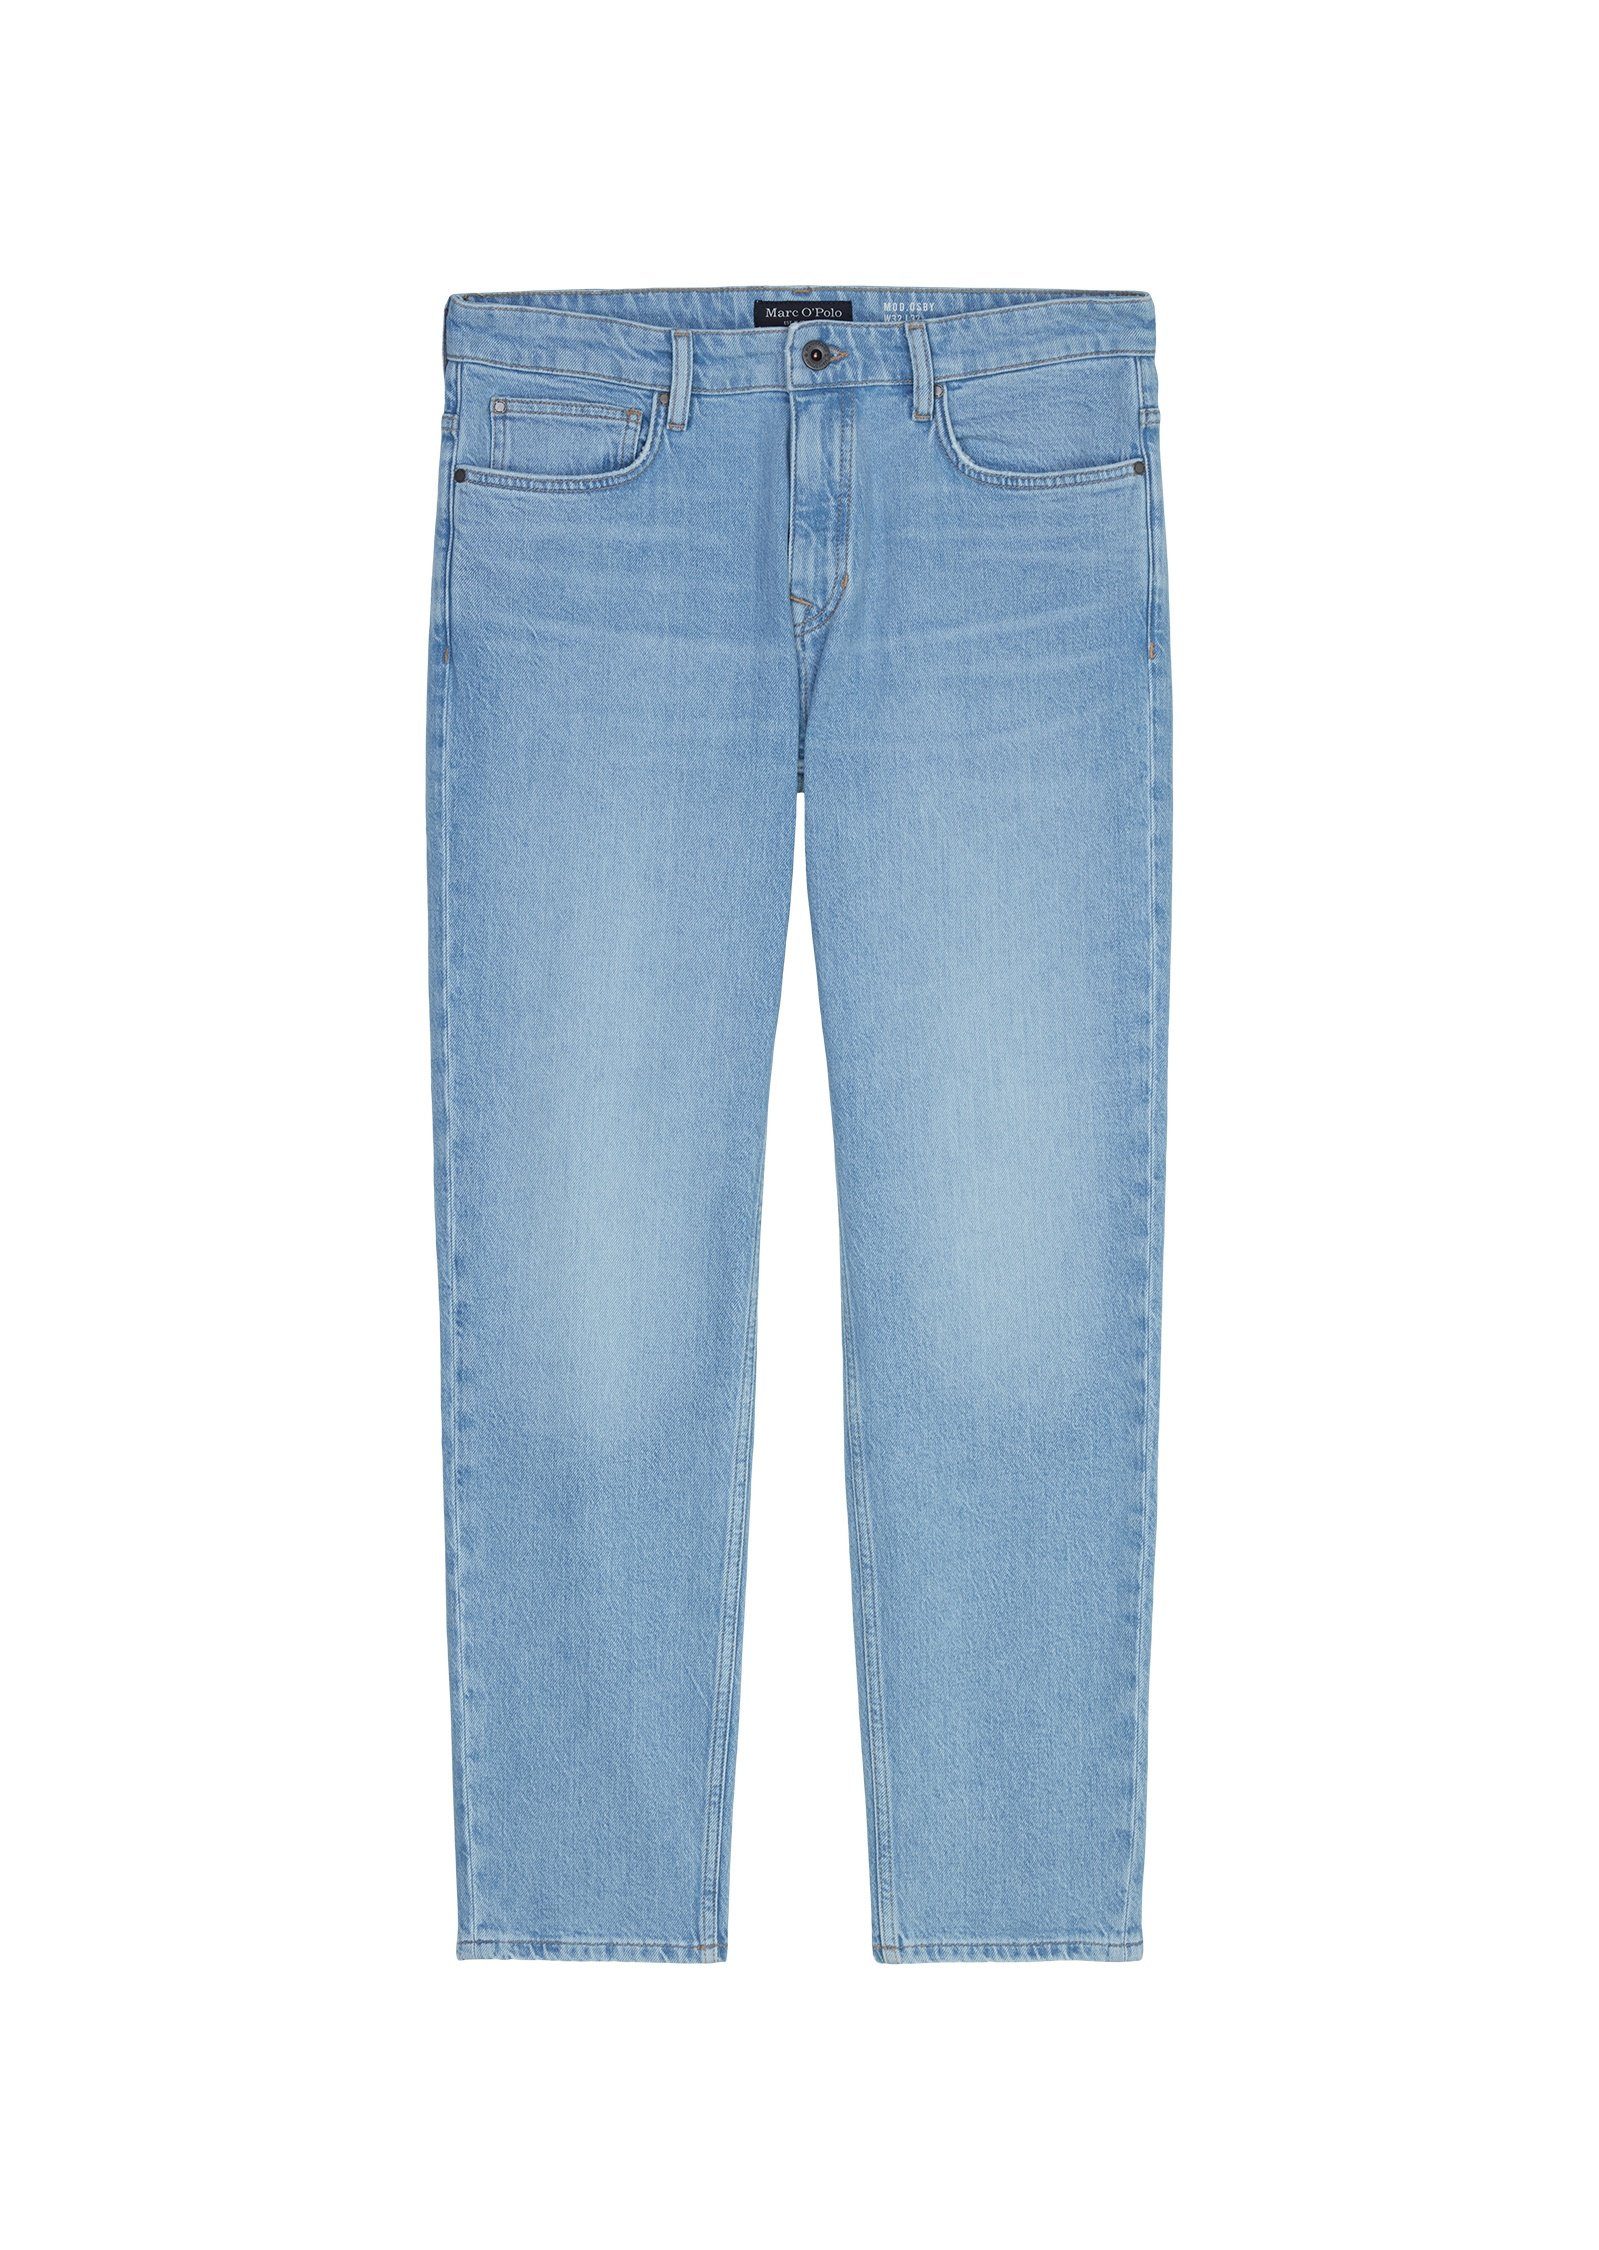 hochwertiger Tapered-fit-Jeans Bio-Baumwolle mit Marc O'Polo